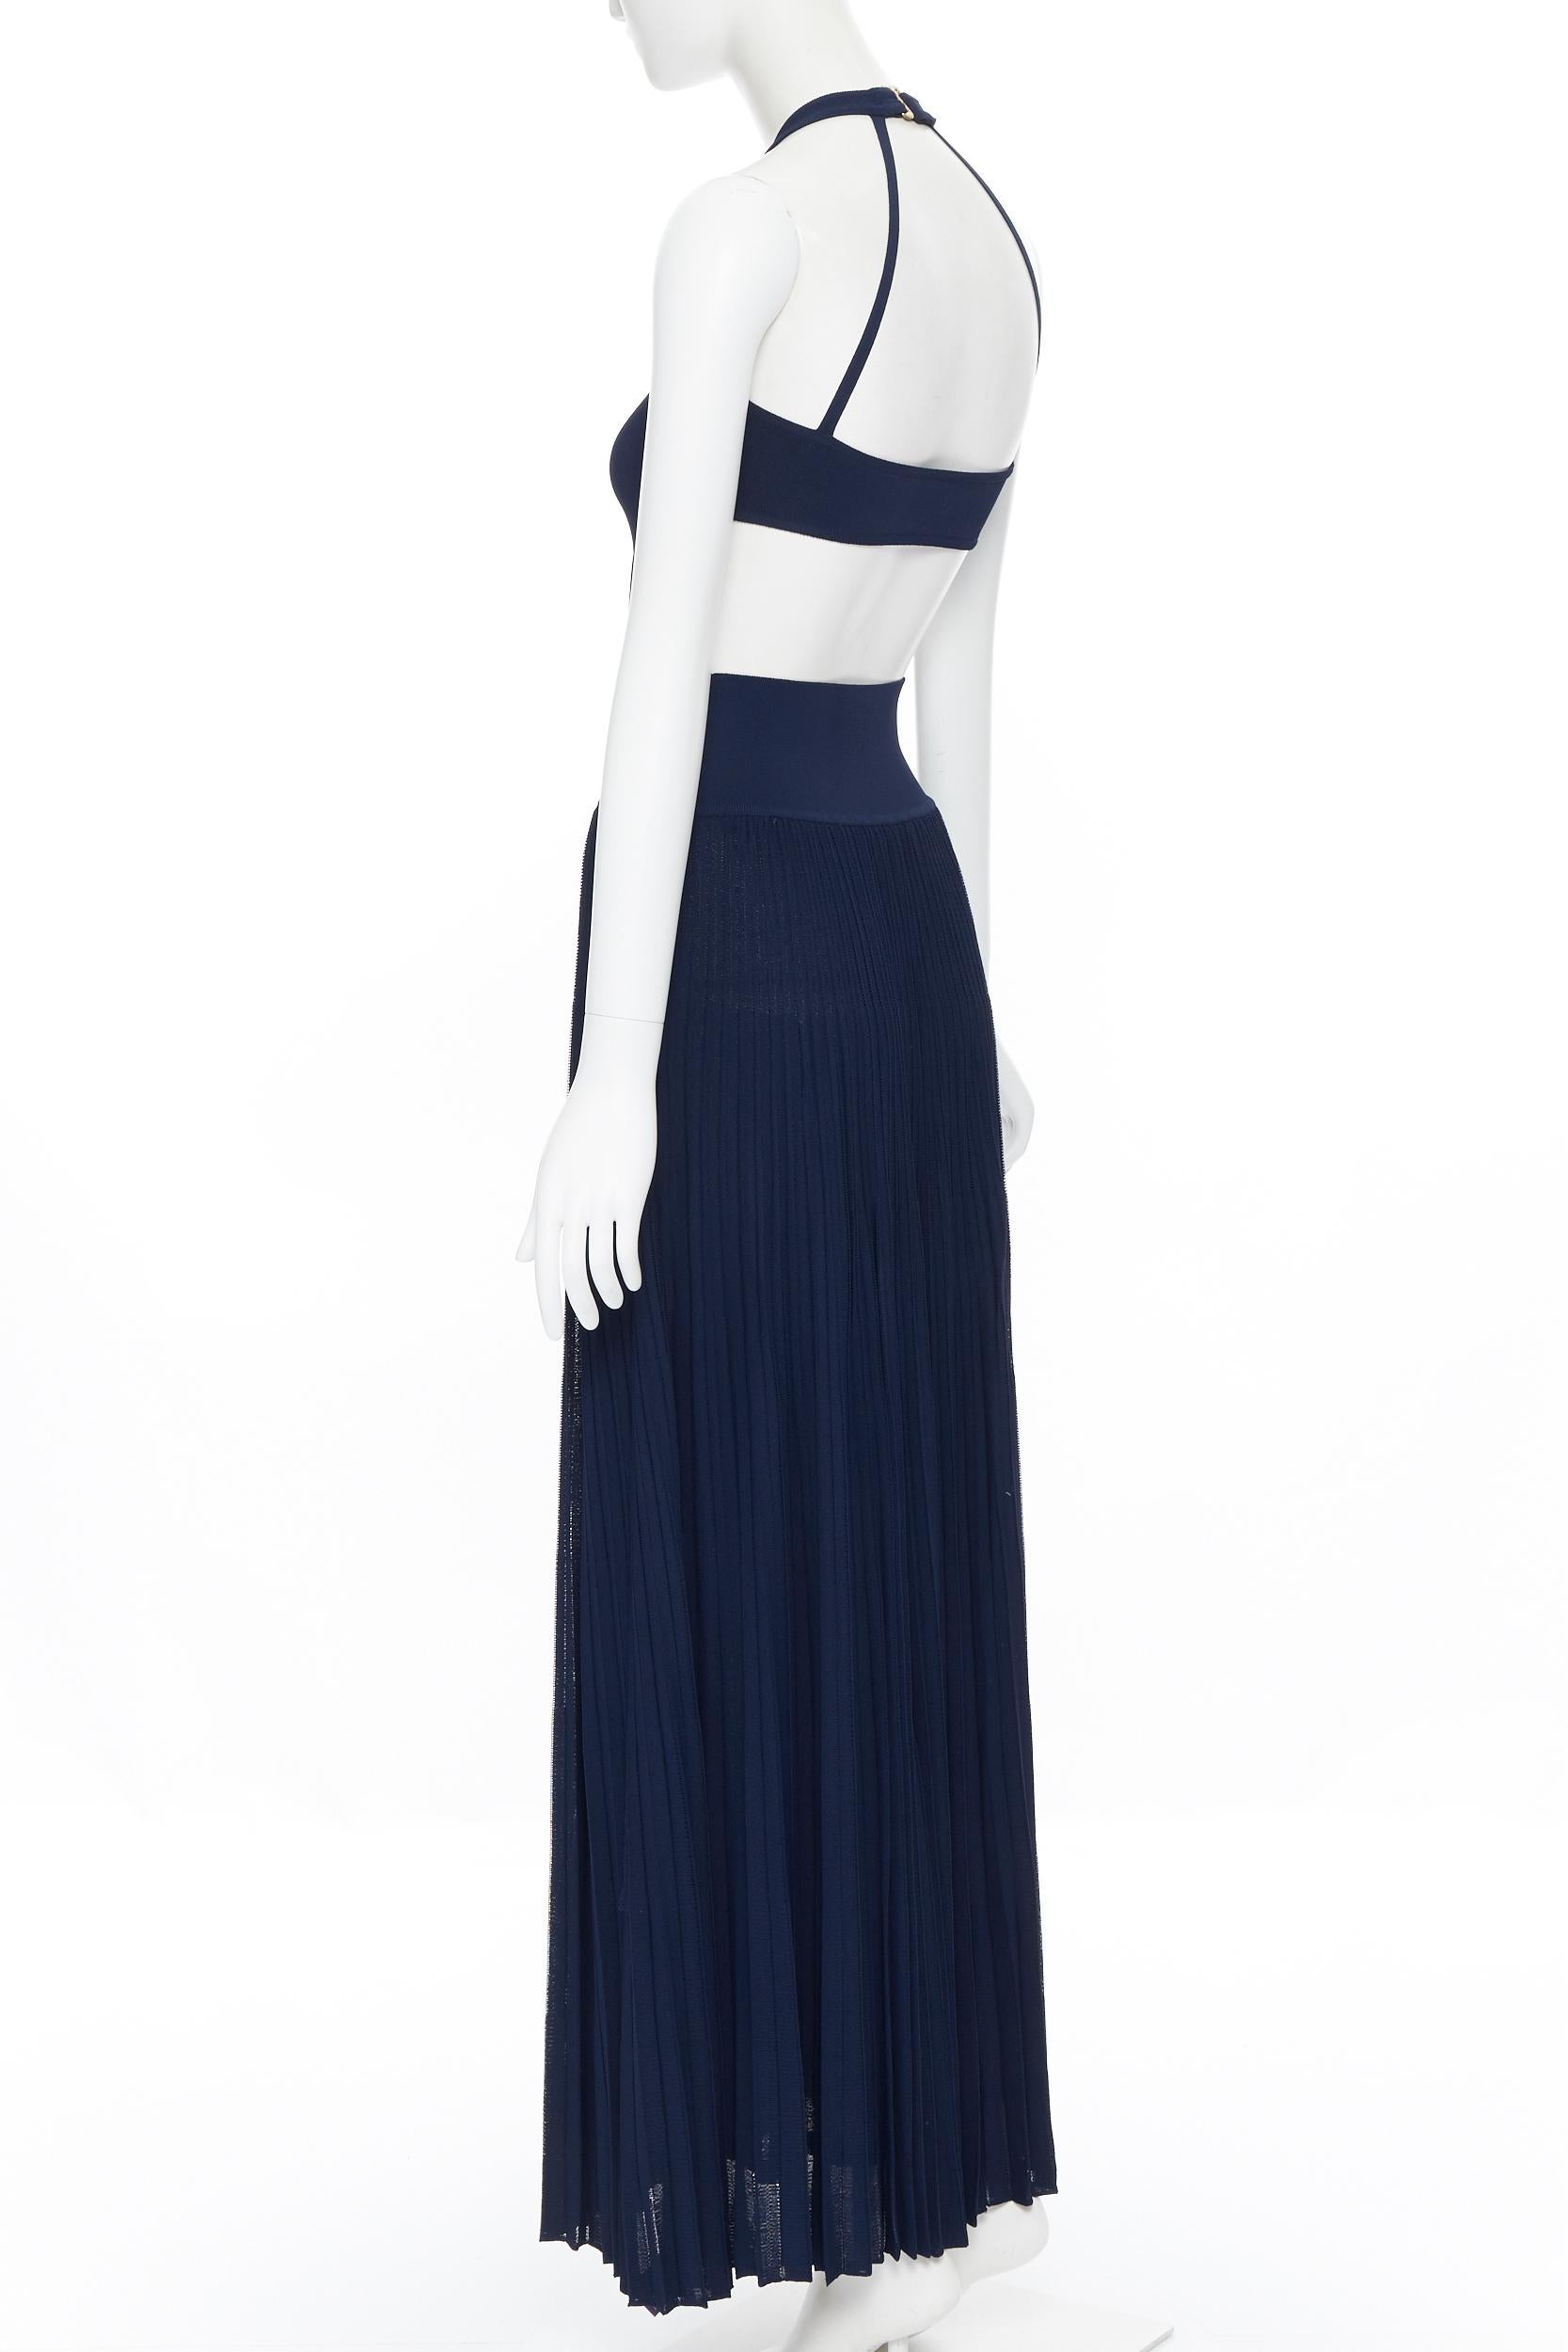 Black RALPH LAUREN PURPLE LABEL navy blue viscose knit cut out pleated skirt gown US4